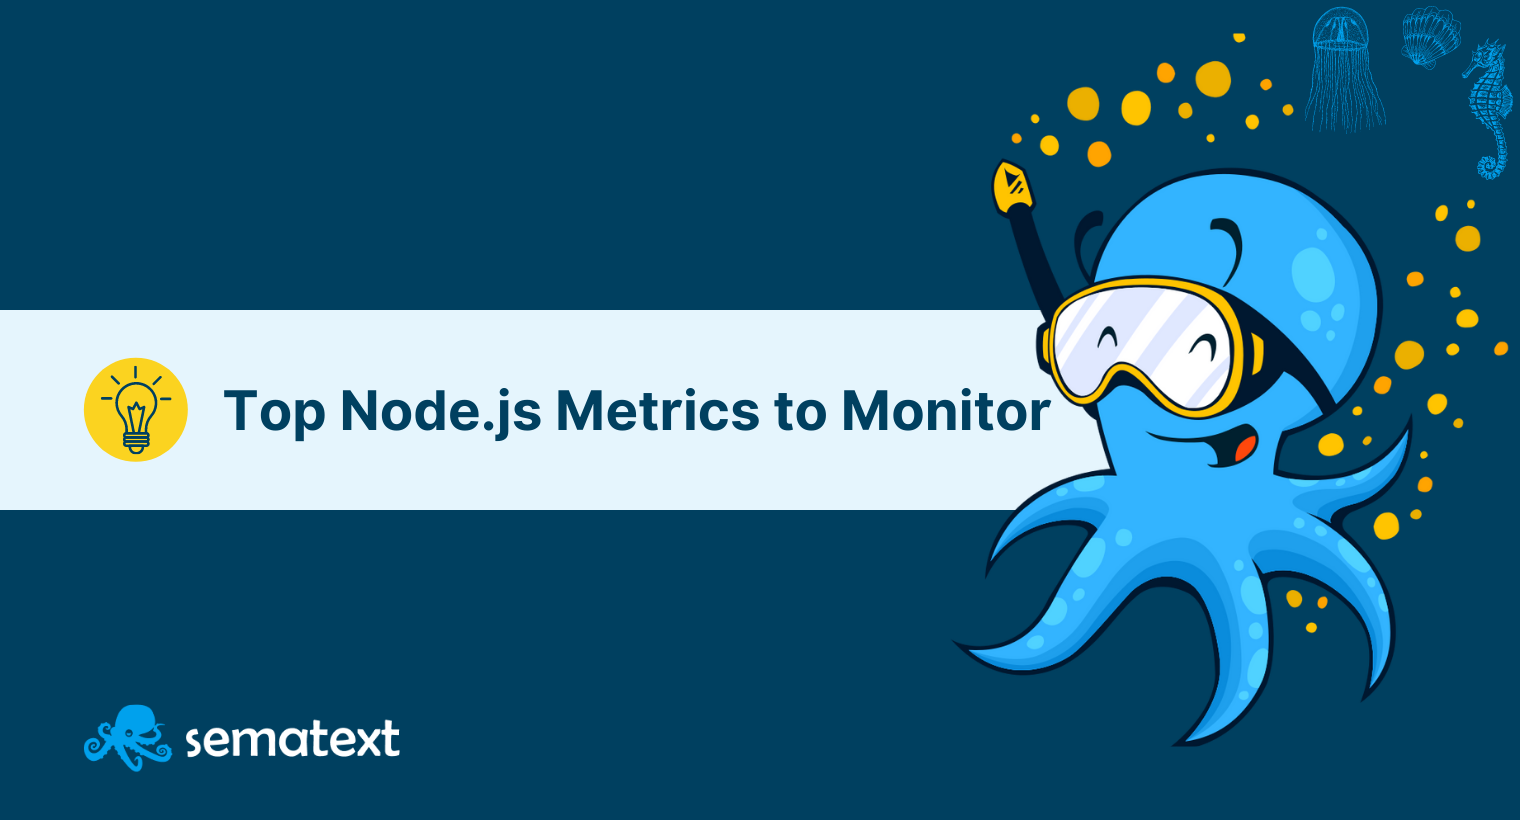 Top Node.js Metrics to Monitor